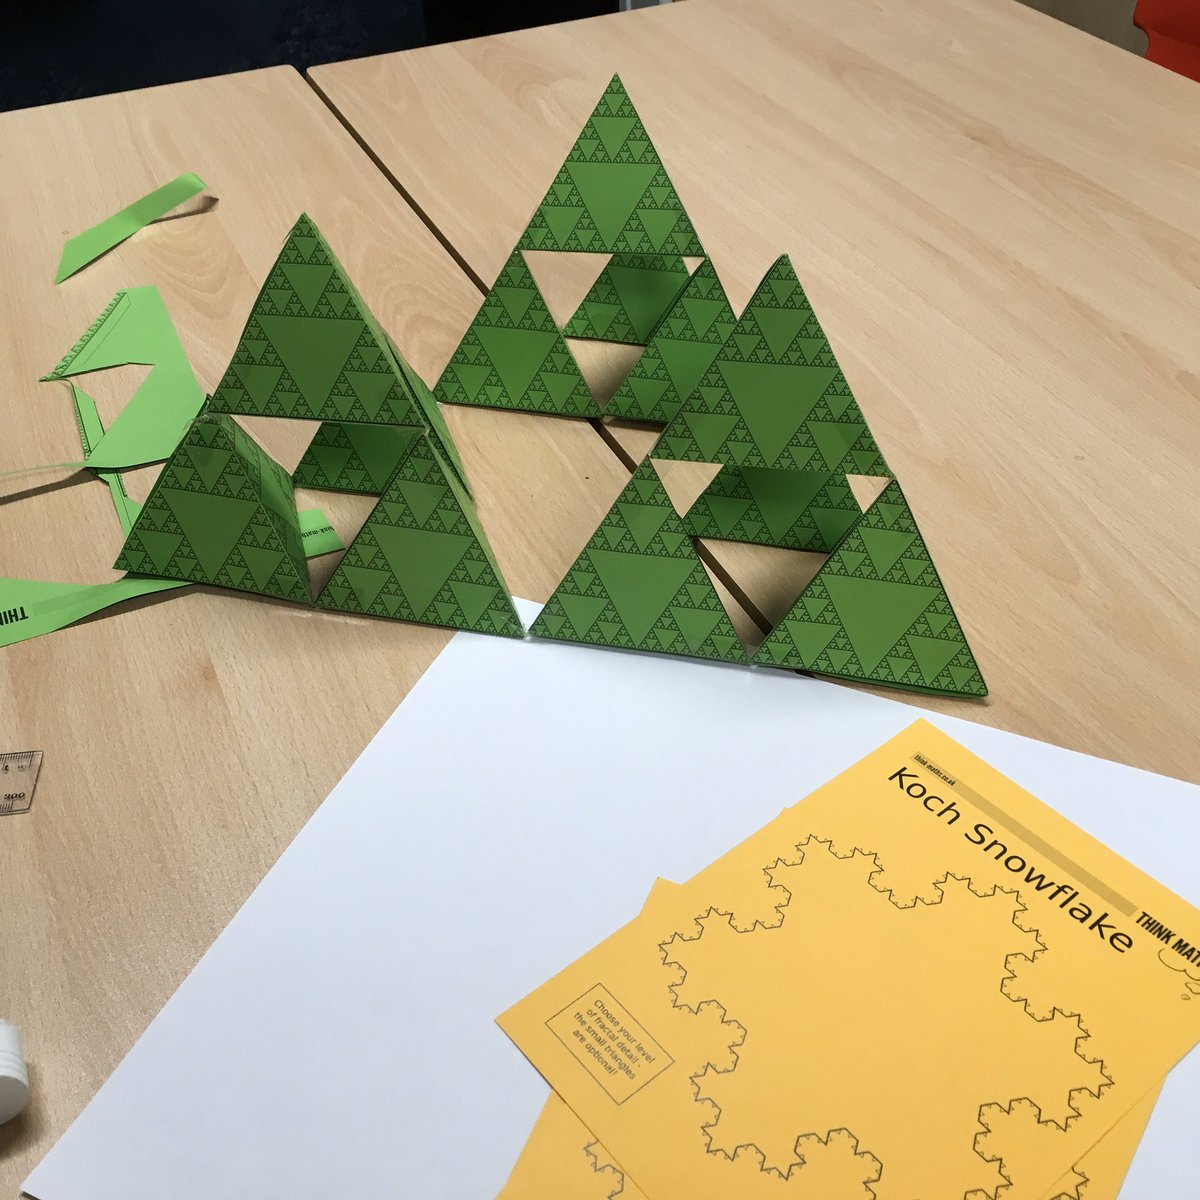 3) A fabulous fractal make:  @standupmaths and  @thinkmaths’ Sierpinski tetrahedrons. Go as big as you dare!Or try your hand at a Menger Sponge or Koch Snowflake:  https://www.think-maths.co.uk/downloads/building-3d-fractals #3DMaths  #HandsOnMaths  #LockdownMaths  #ArtfulMaths  #MathsArt  #Fractals